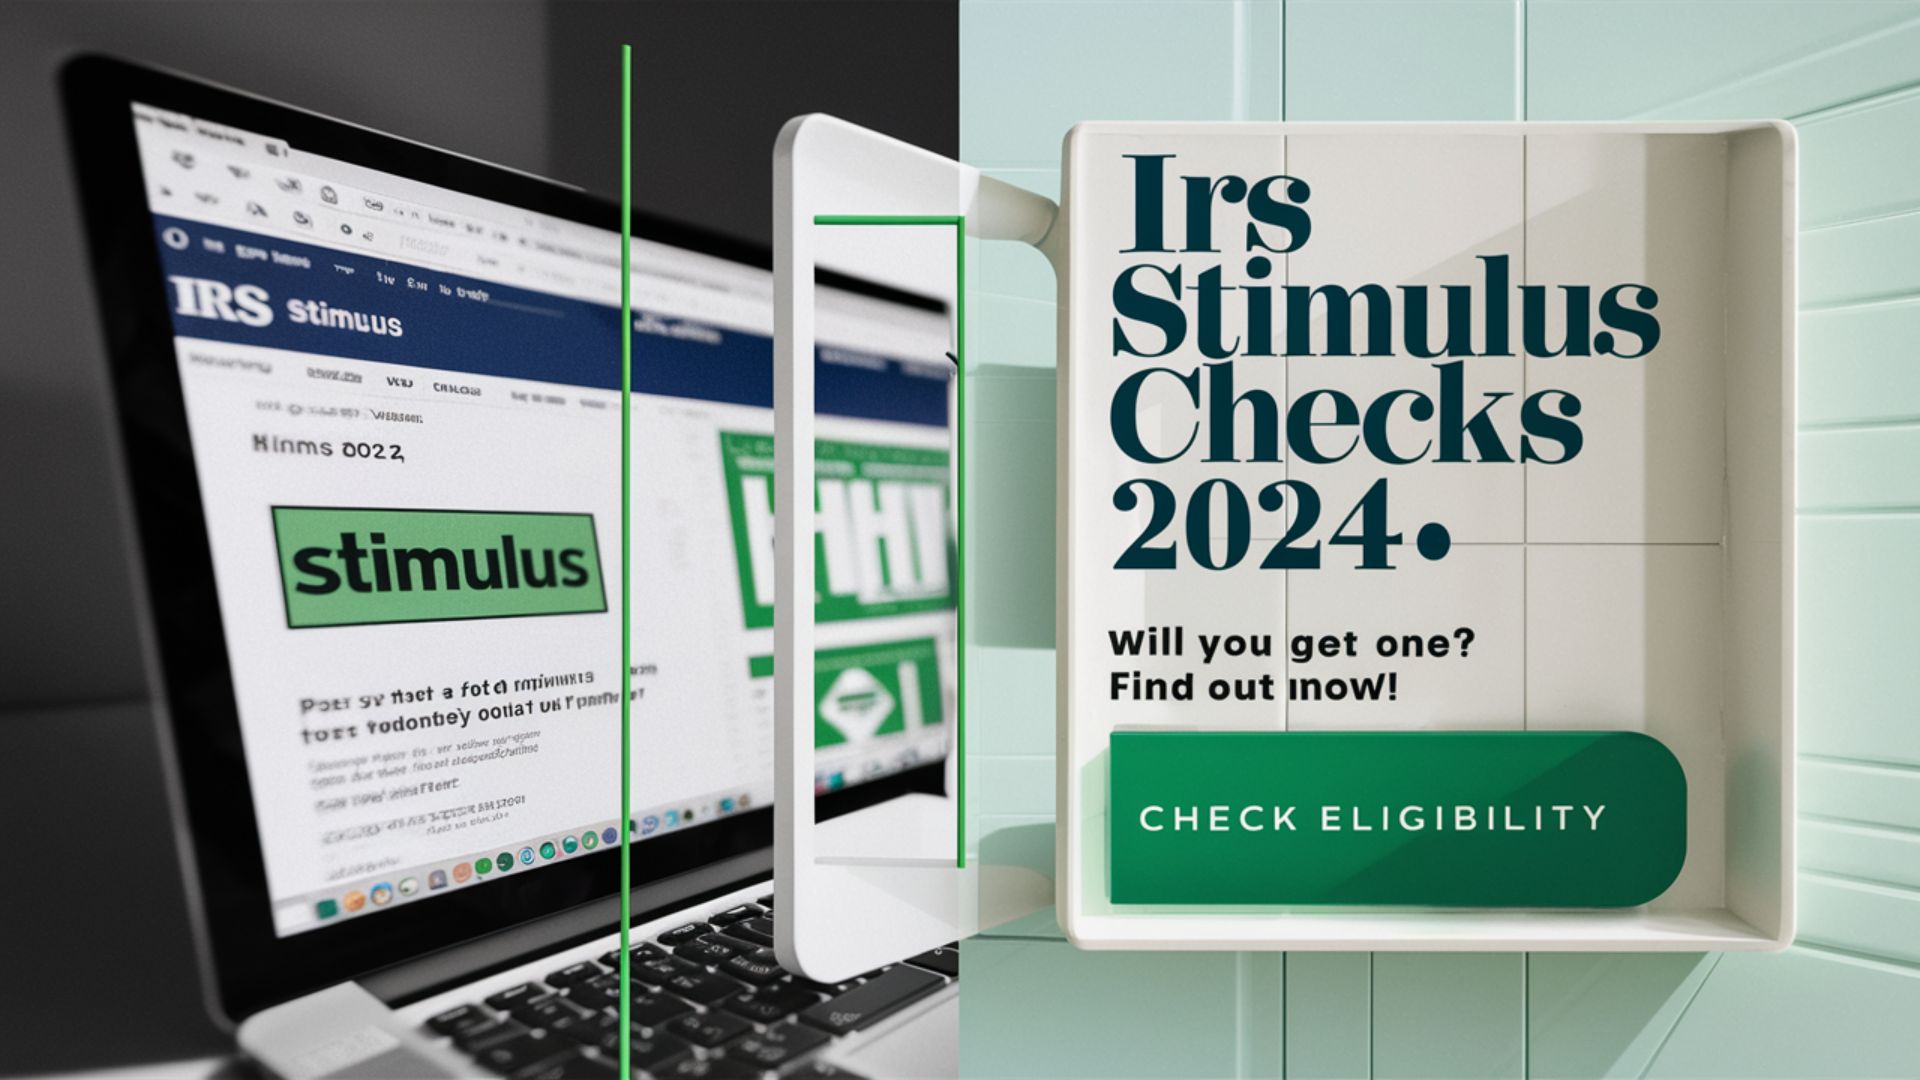 IRS Stimulus Checks 2024 (2)